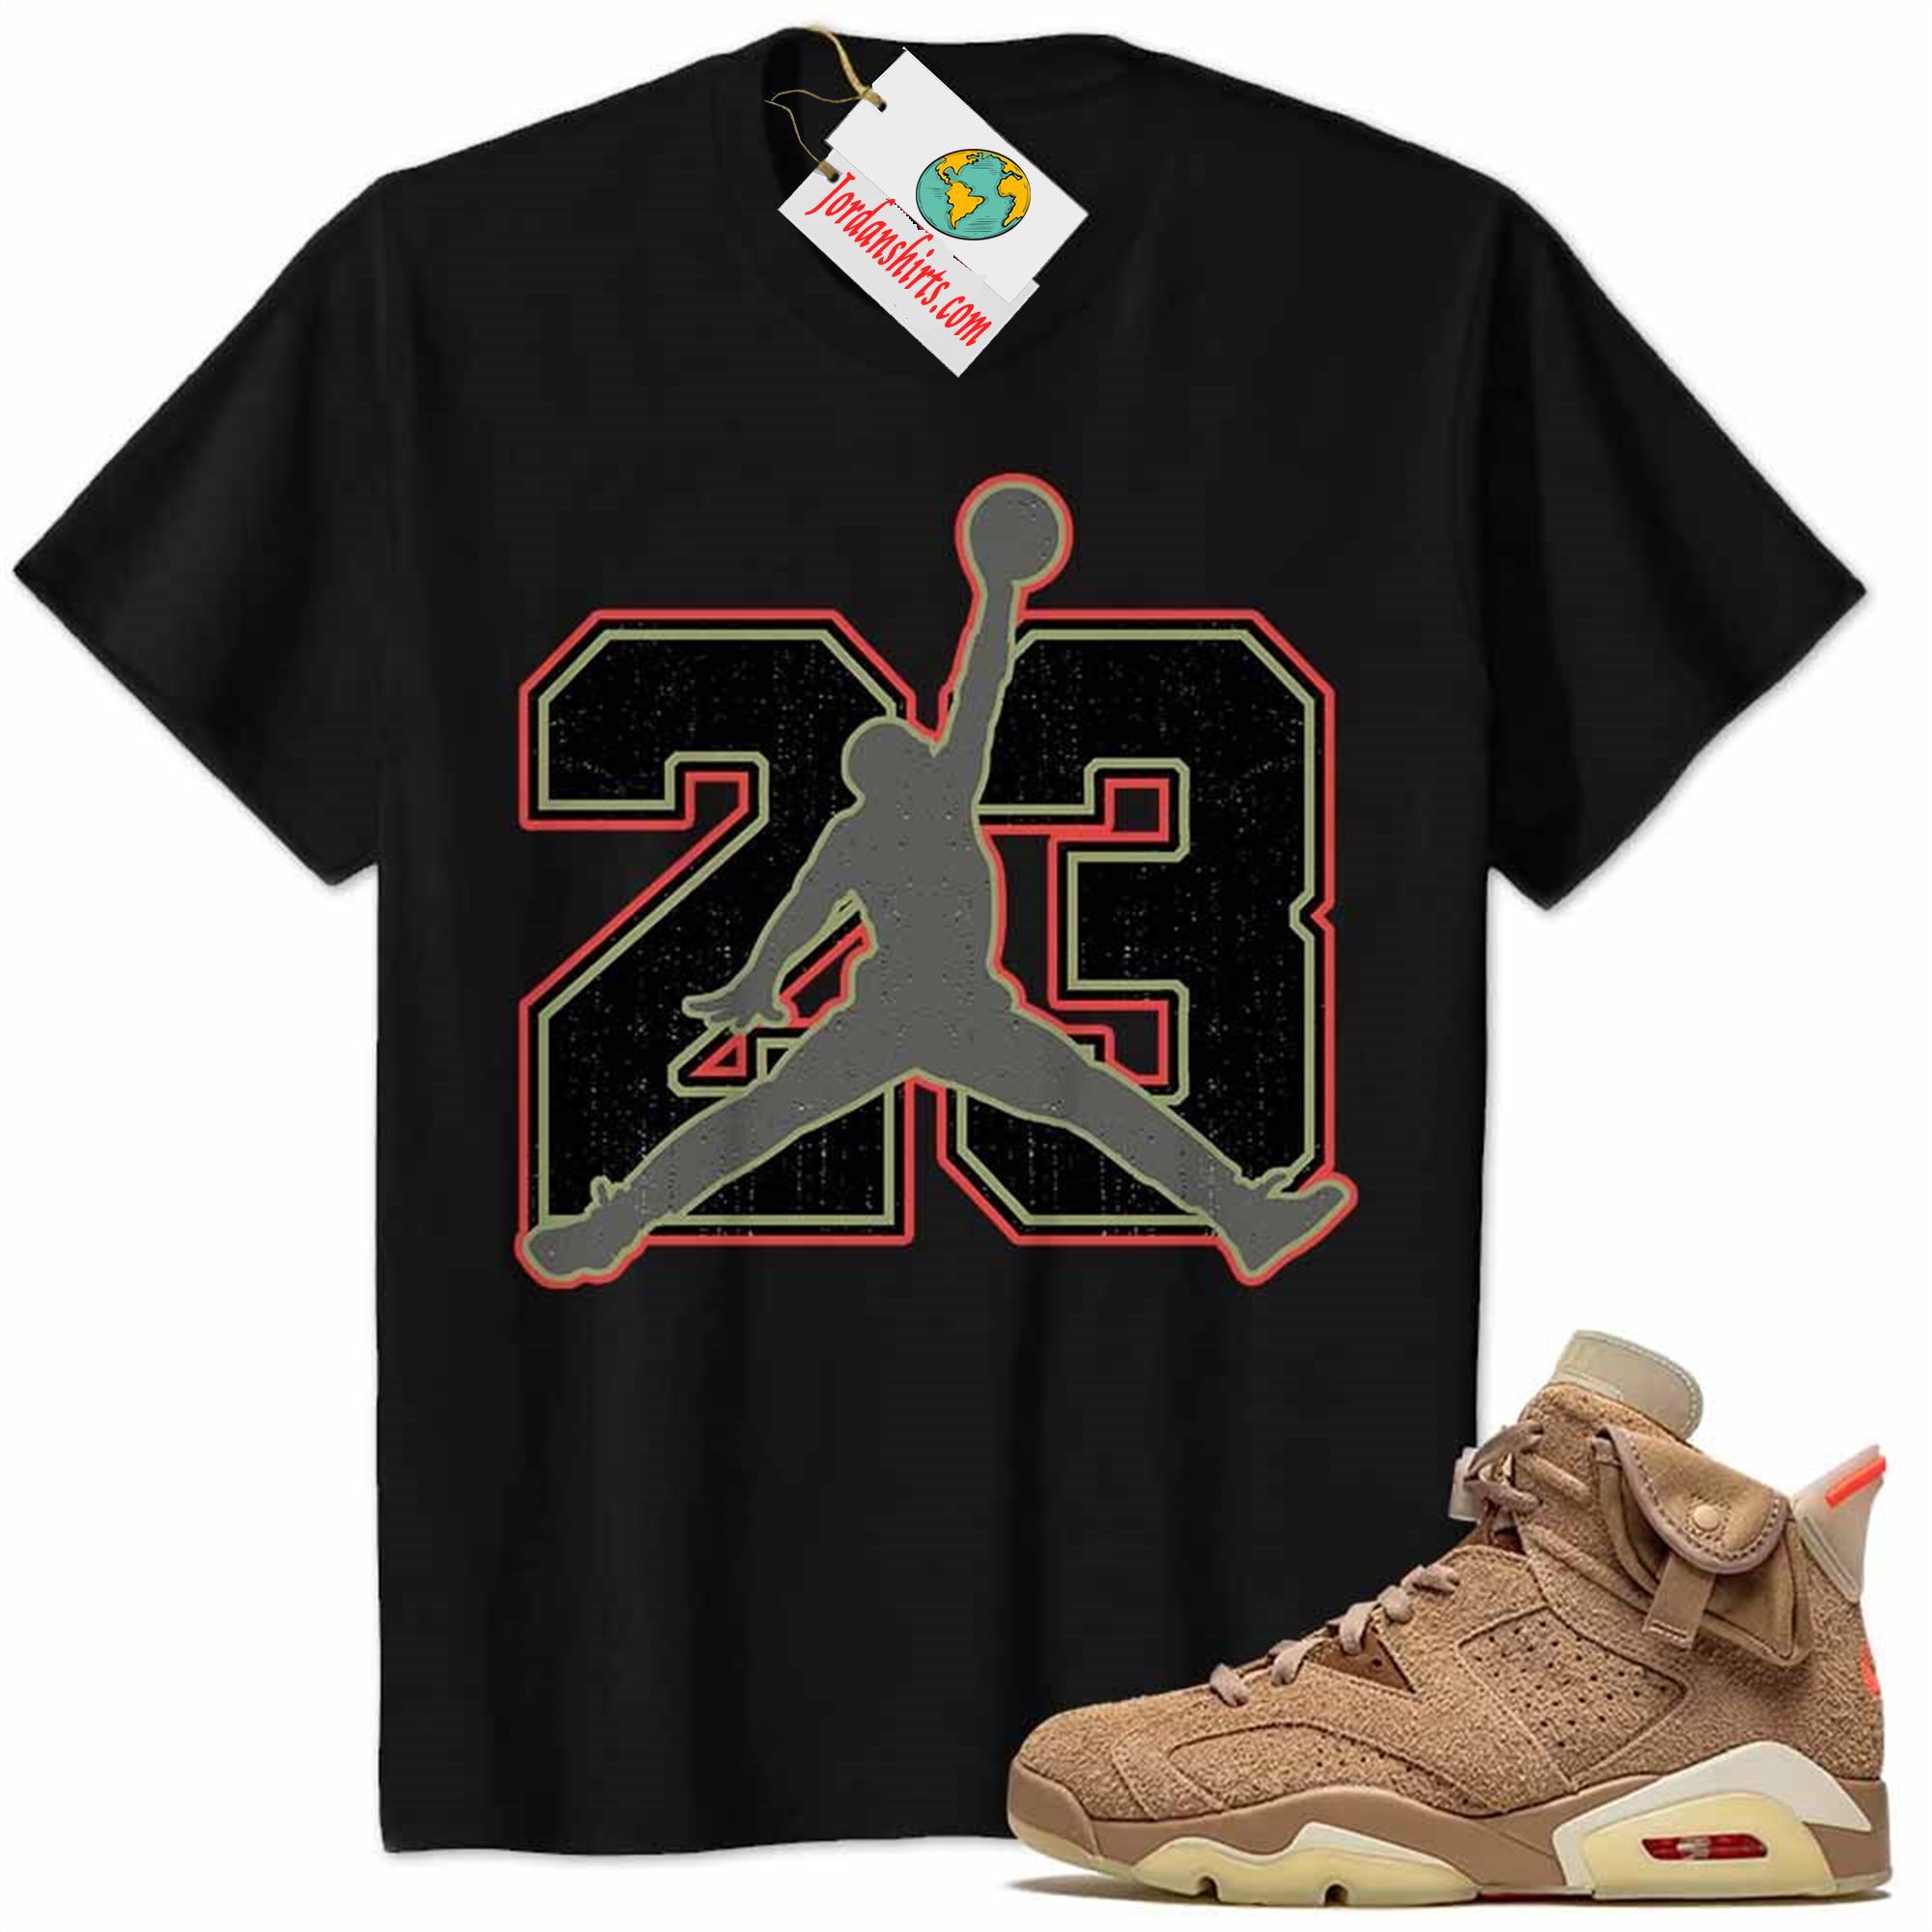 Jordan 6 Shirt, Jordan 6 Travis Scott Shirt Jumpman No23 Black Plus Size Up To 5xl